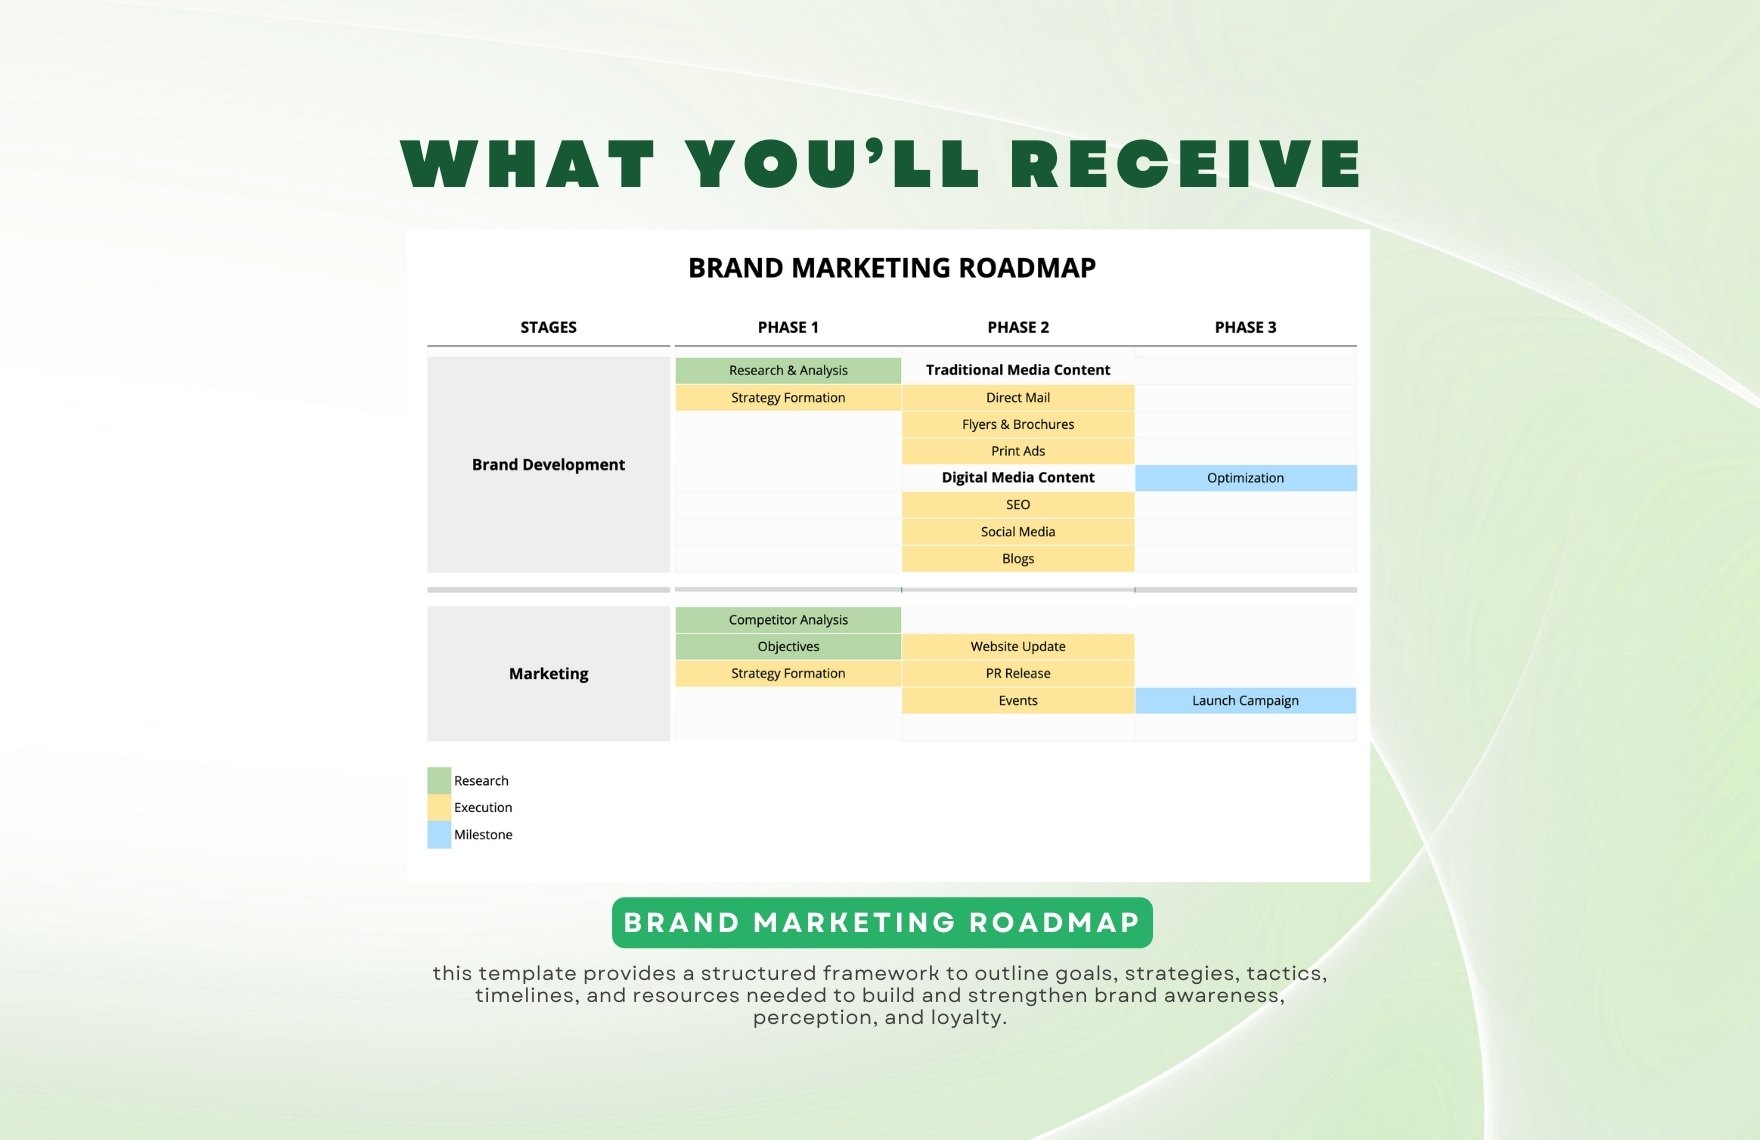 Brand Marketing Roadmap Template